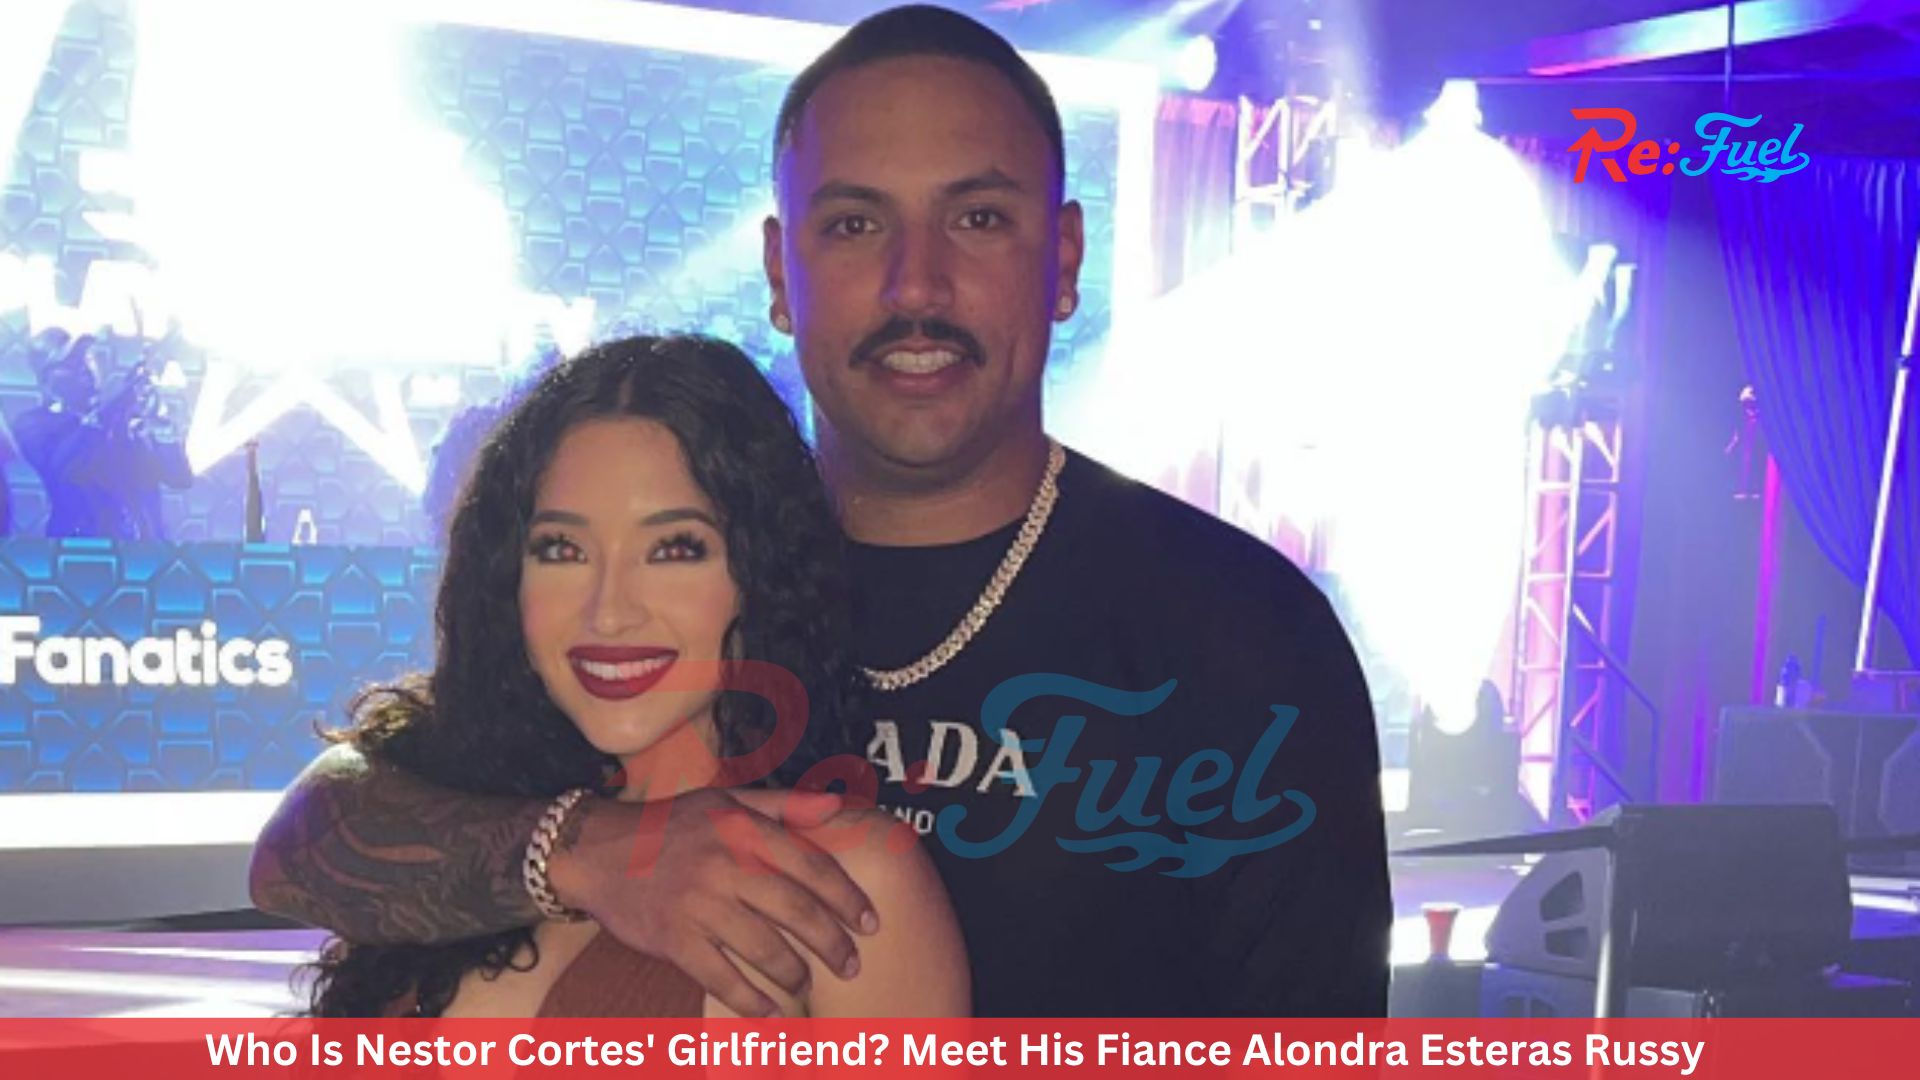 Who Is Nestor Cortes' Girlfriend? Meet His Fiance Alondra Esteras Russy